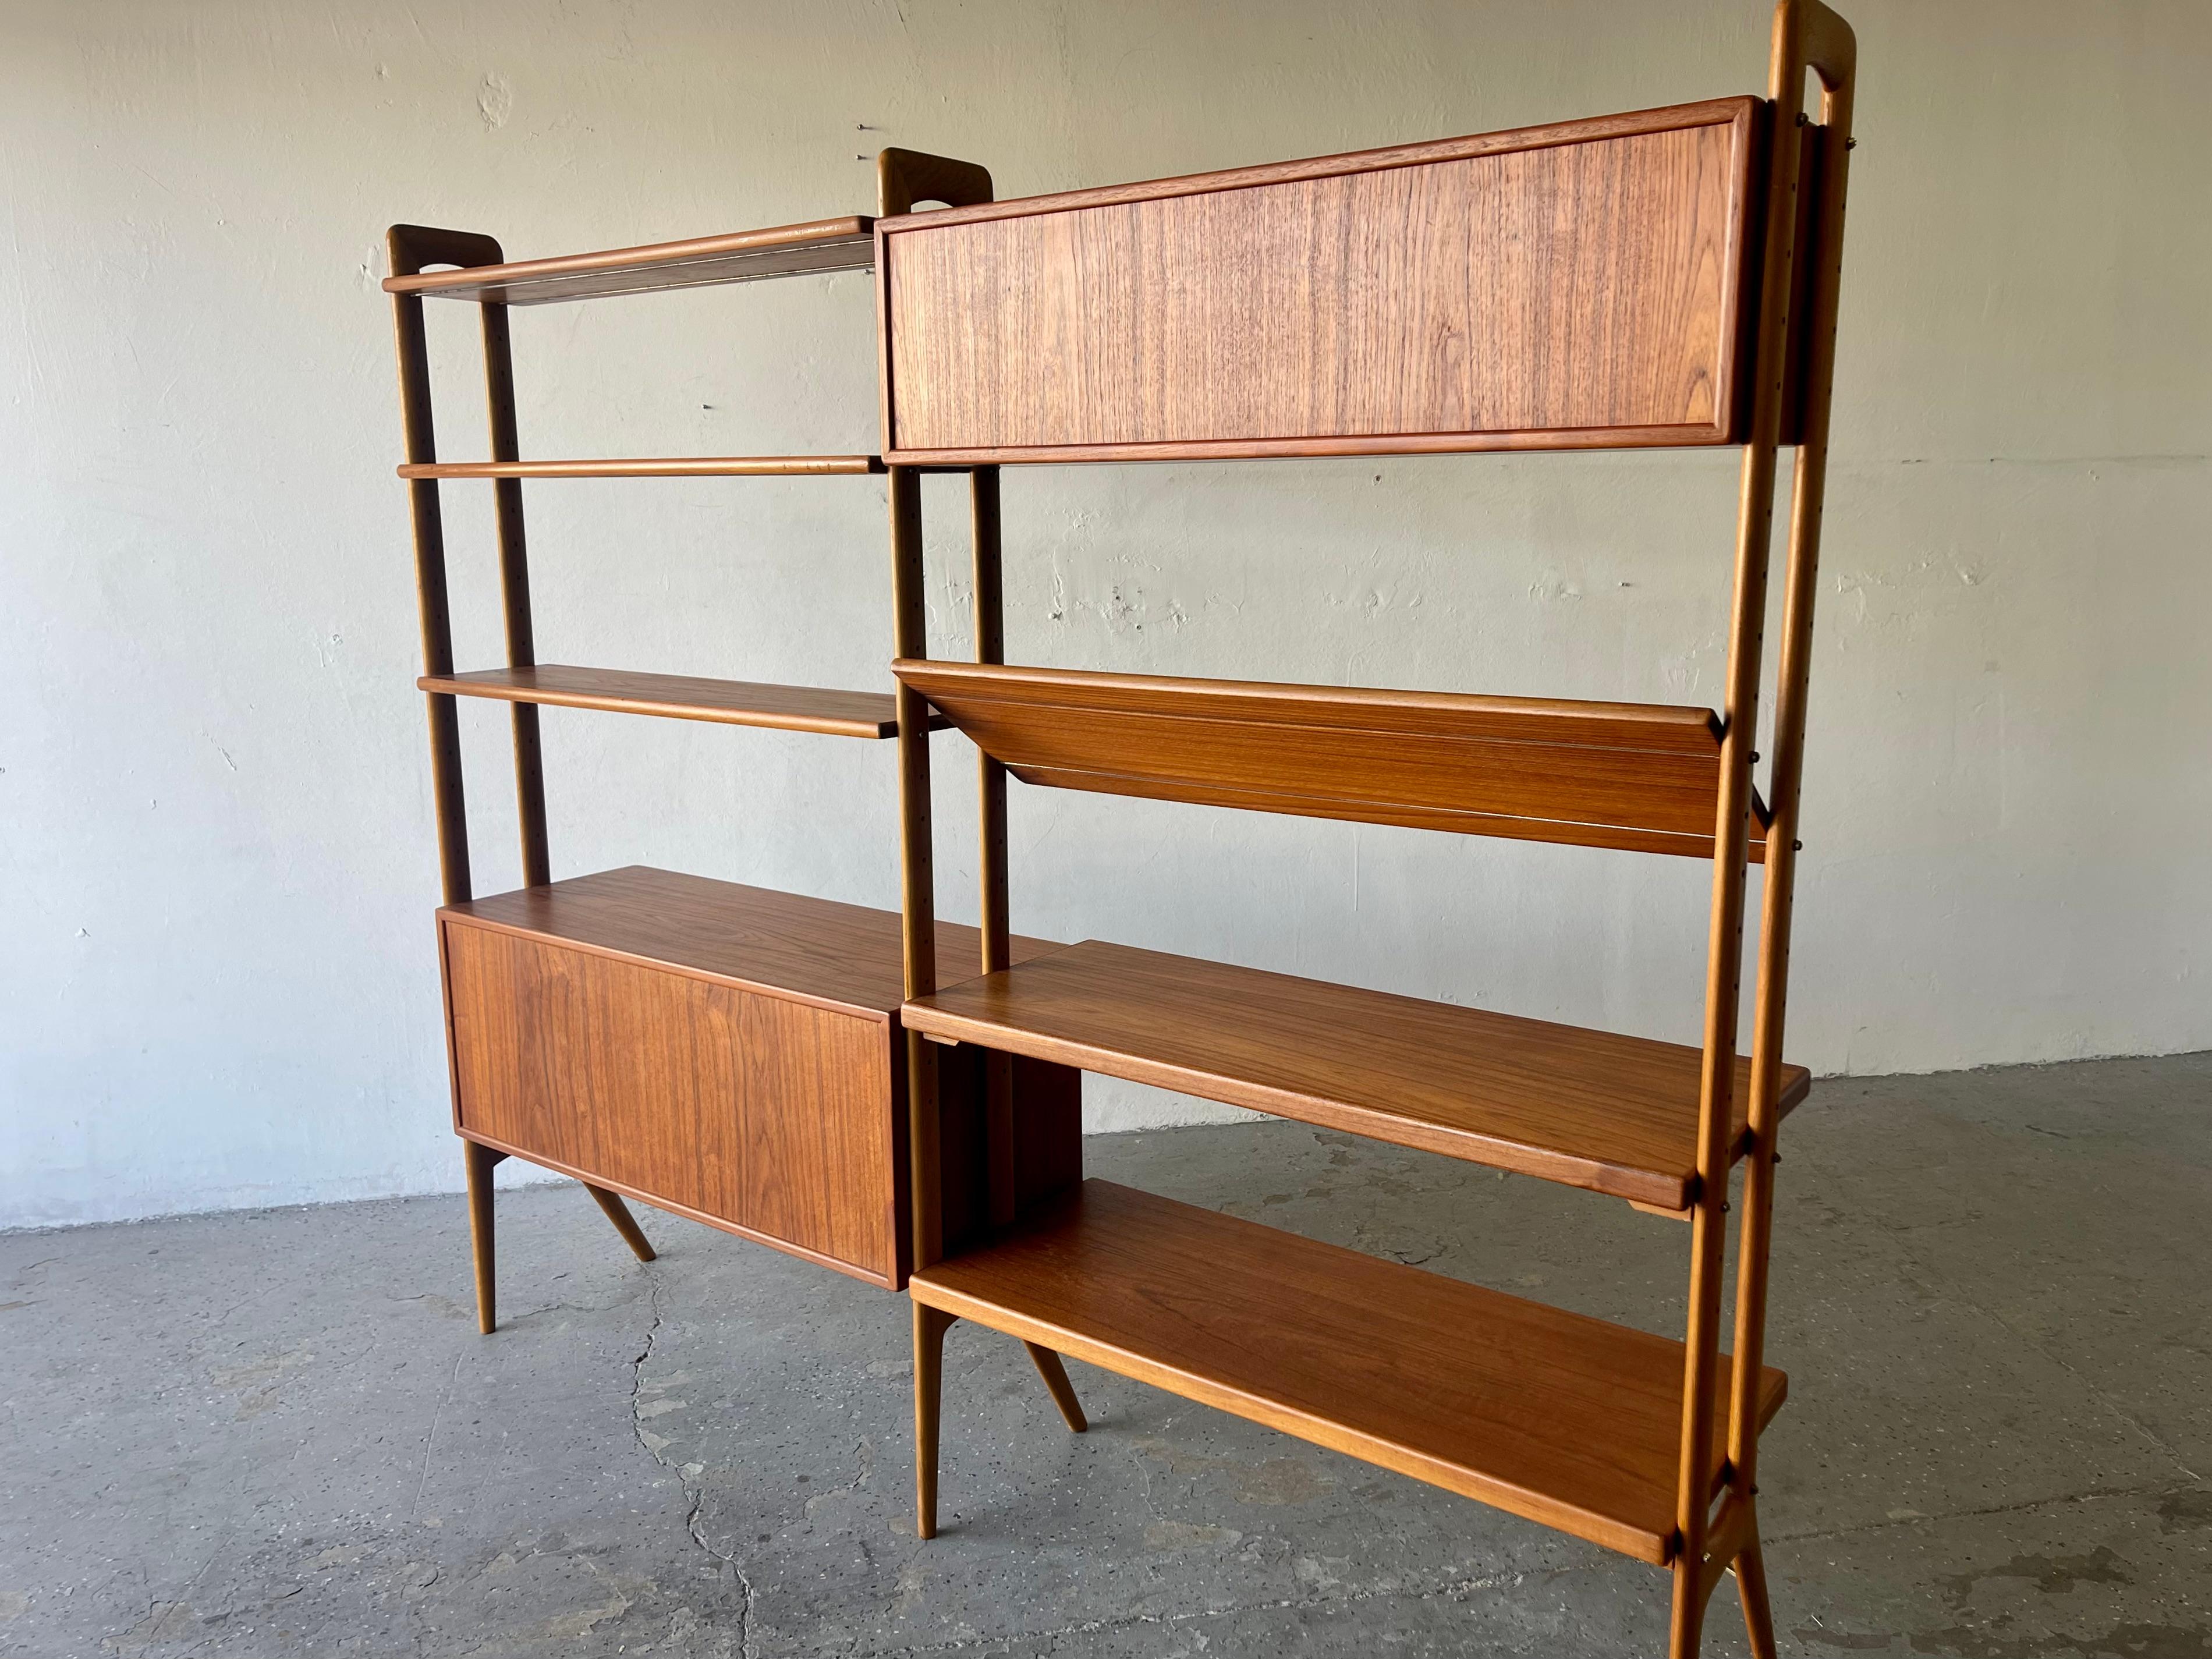 Mid-20th Century Danish Modern Kurt Ostervig Teak Wall Unit or Room Divider / Book Shelves 2 Bay